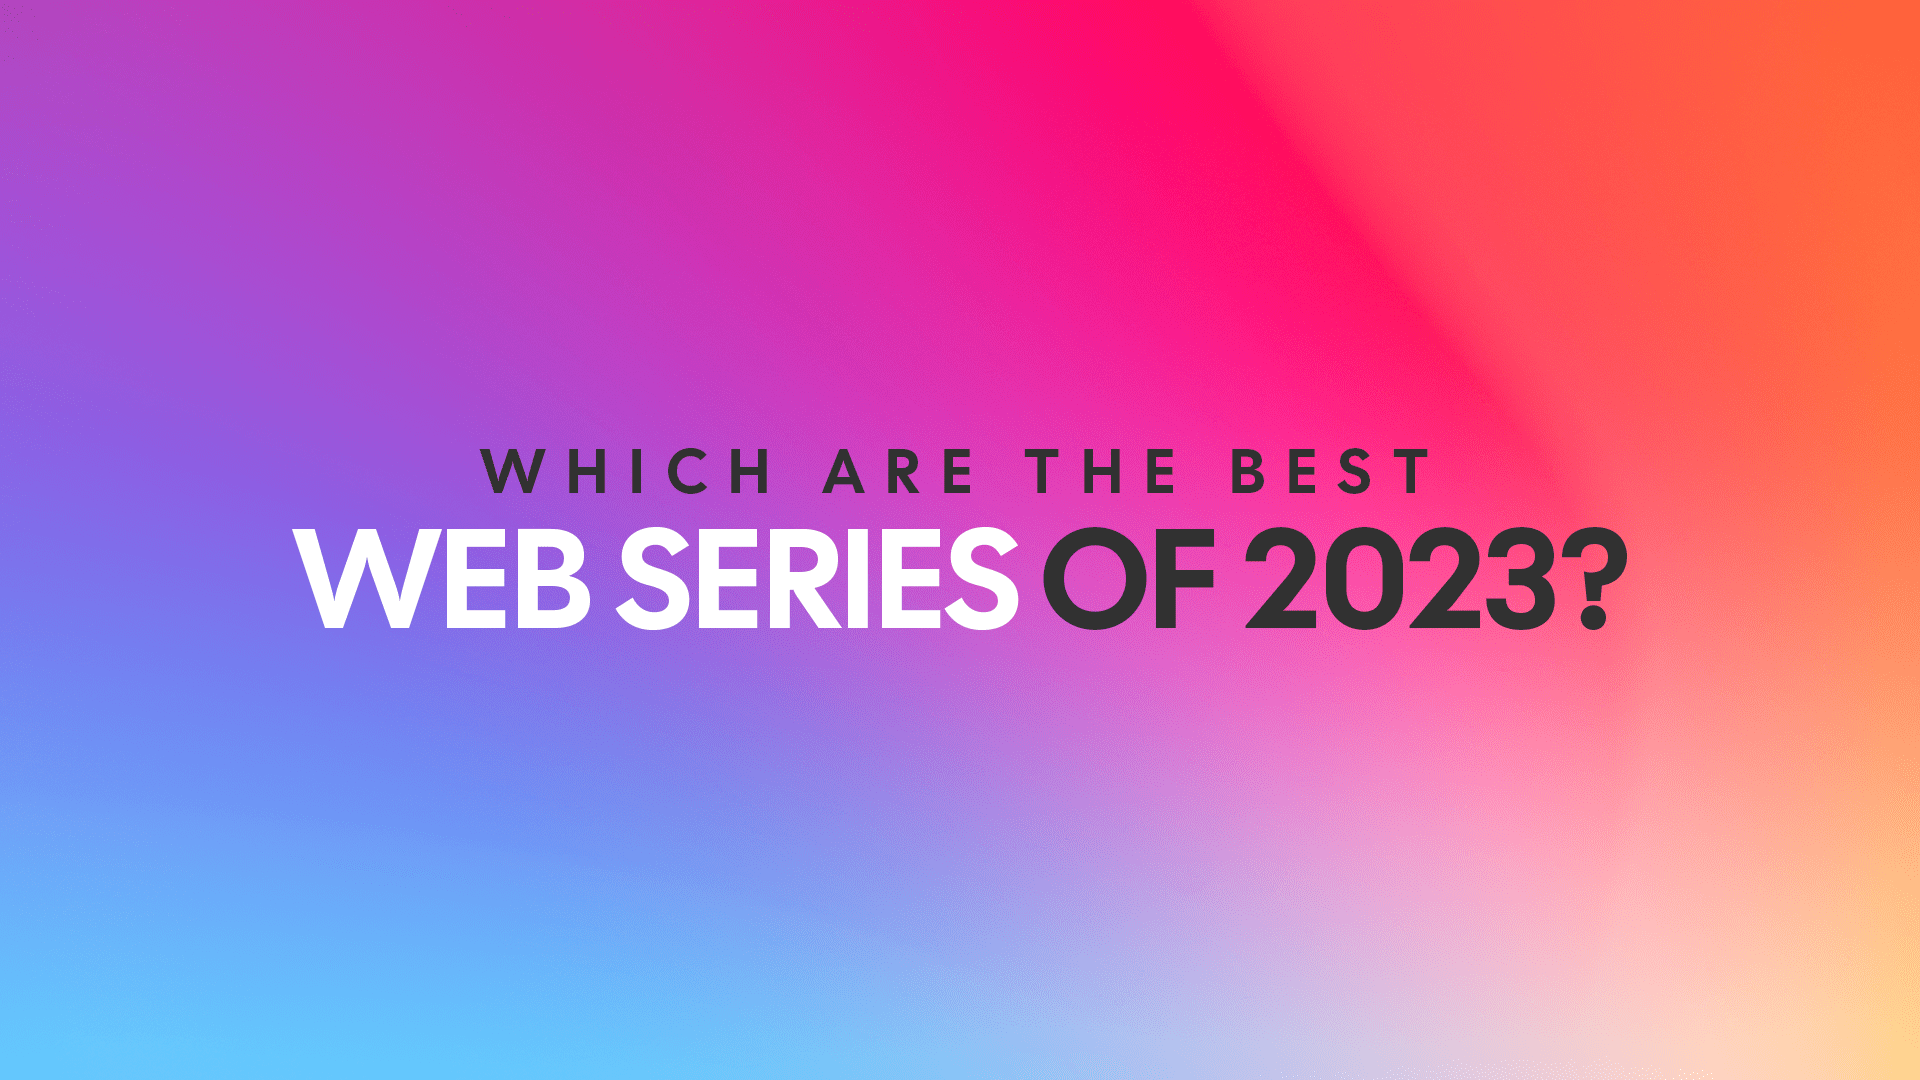 Top 7 Web Series of 2023